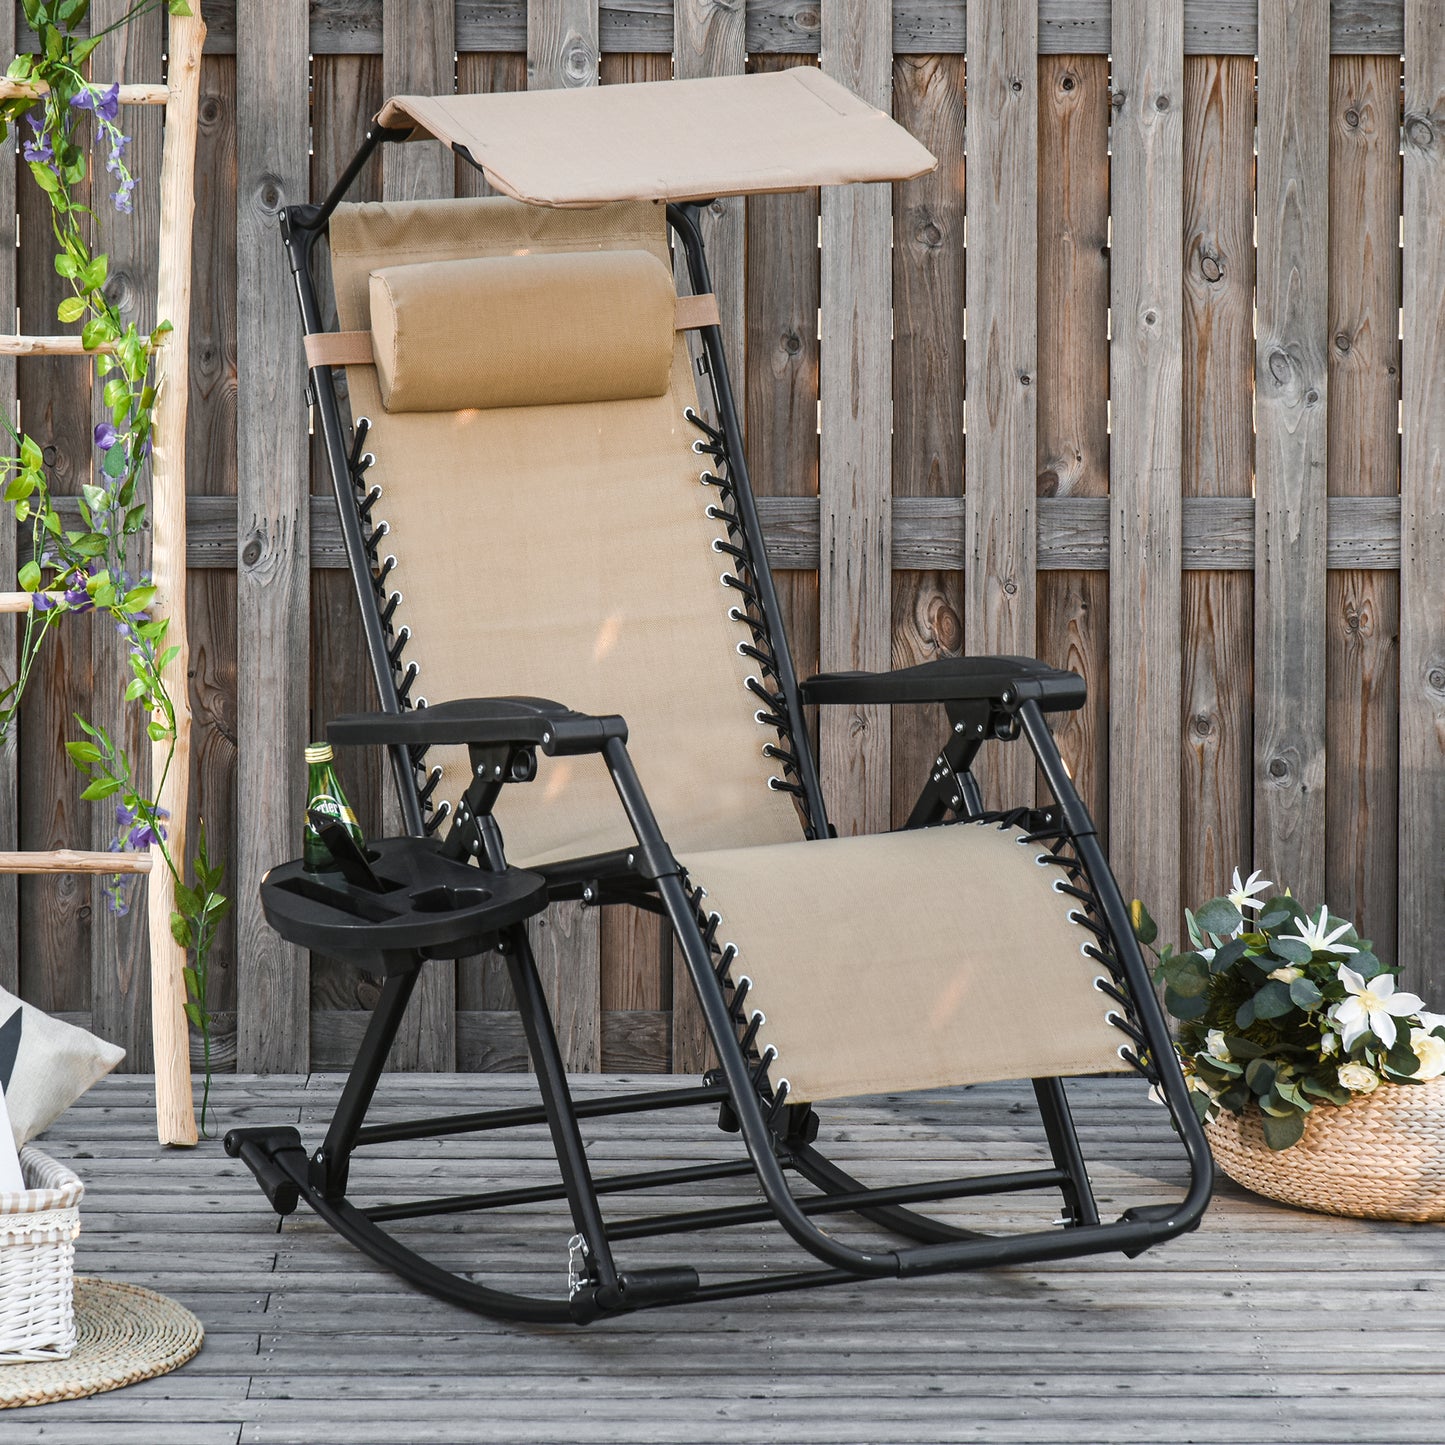 Outsunny Garden Rocking Chair Folding Recliner Outdoor Adjustable Sun Lounger Rocker Zero-Gravity Seat with Headrest Side Holder Patio Deck - Beige